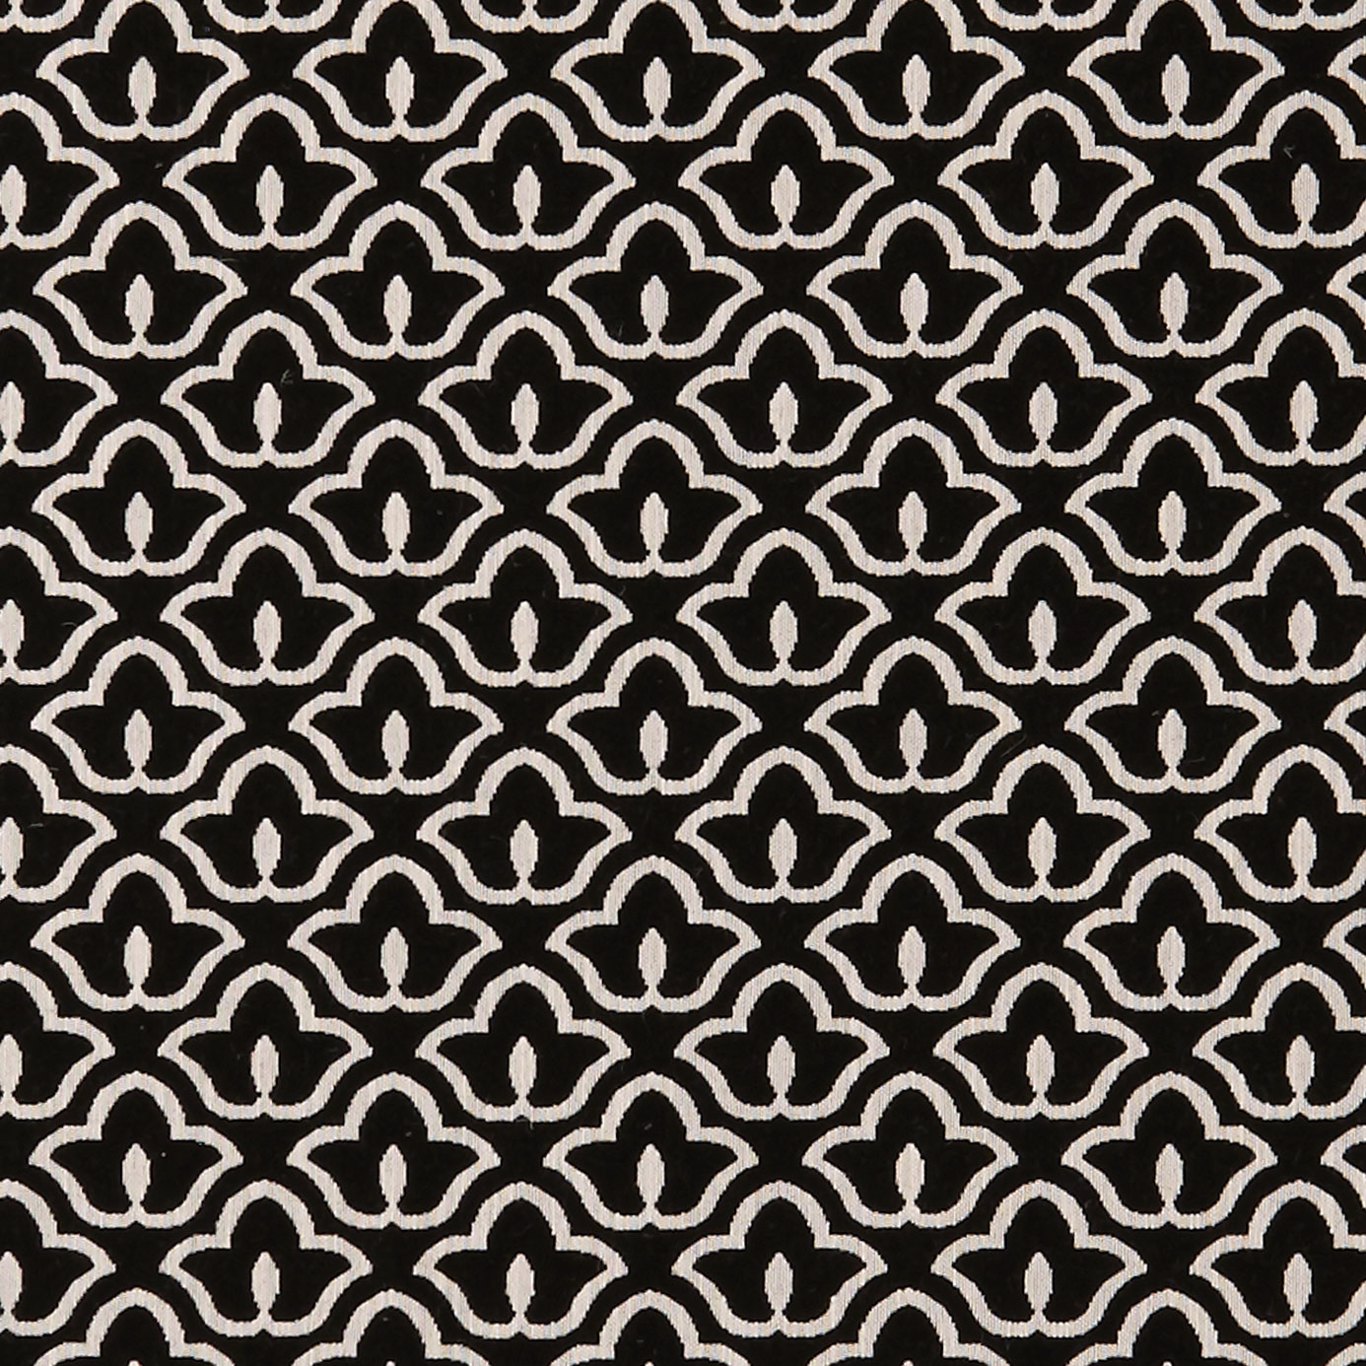 BW1014 Black/White Fabric by CNC